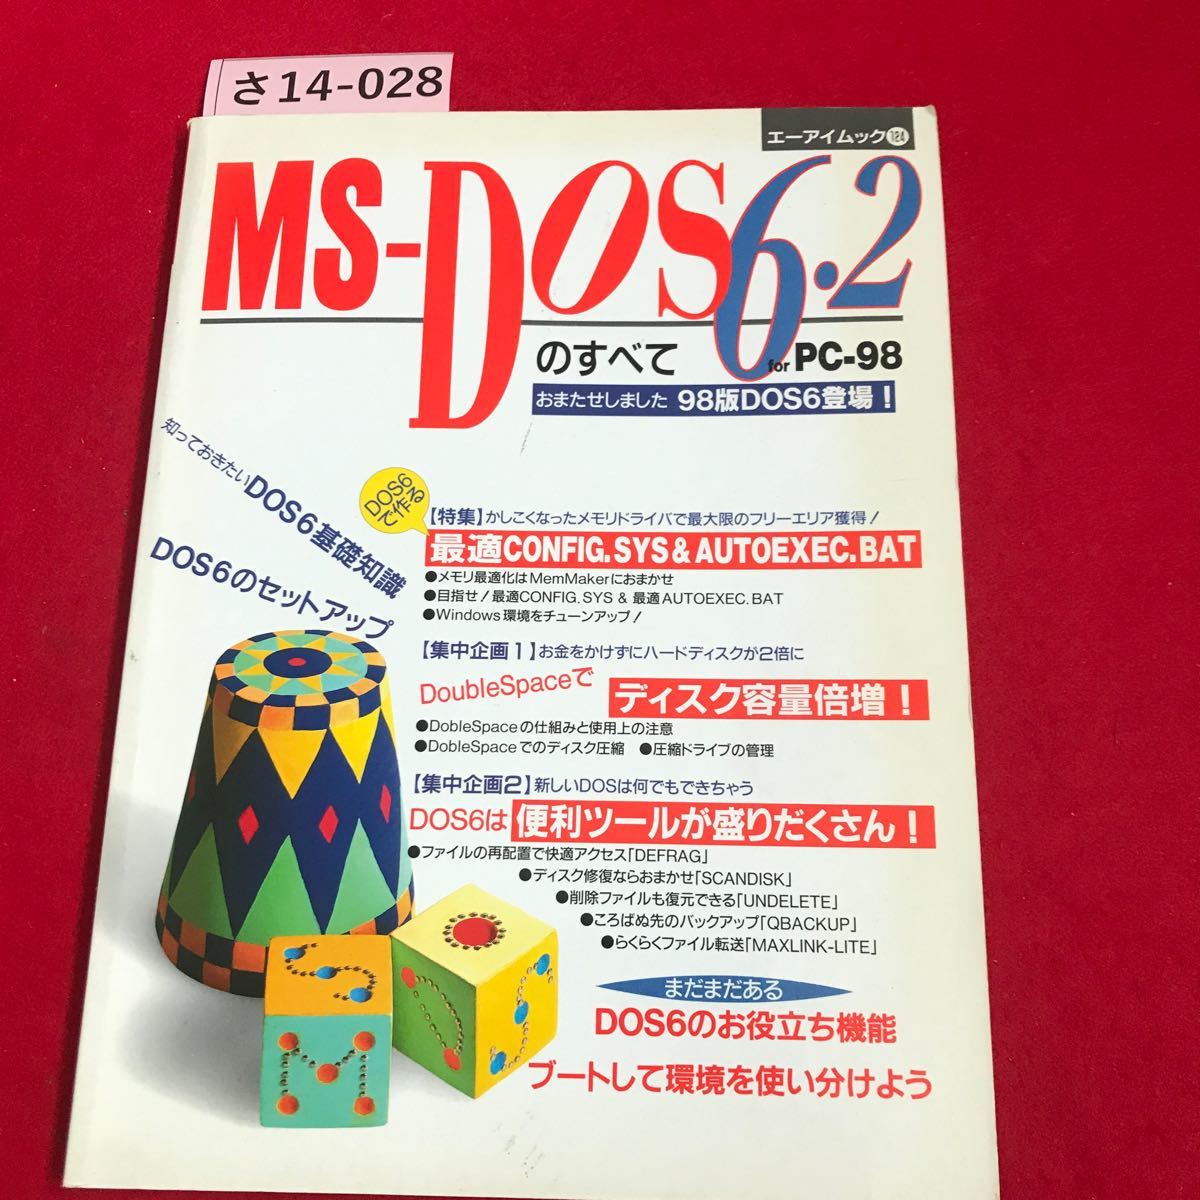 sa14-028e- I Mucc MS-DOS6.2. все PC-98